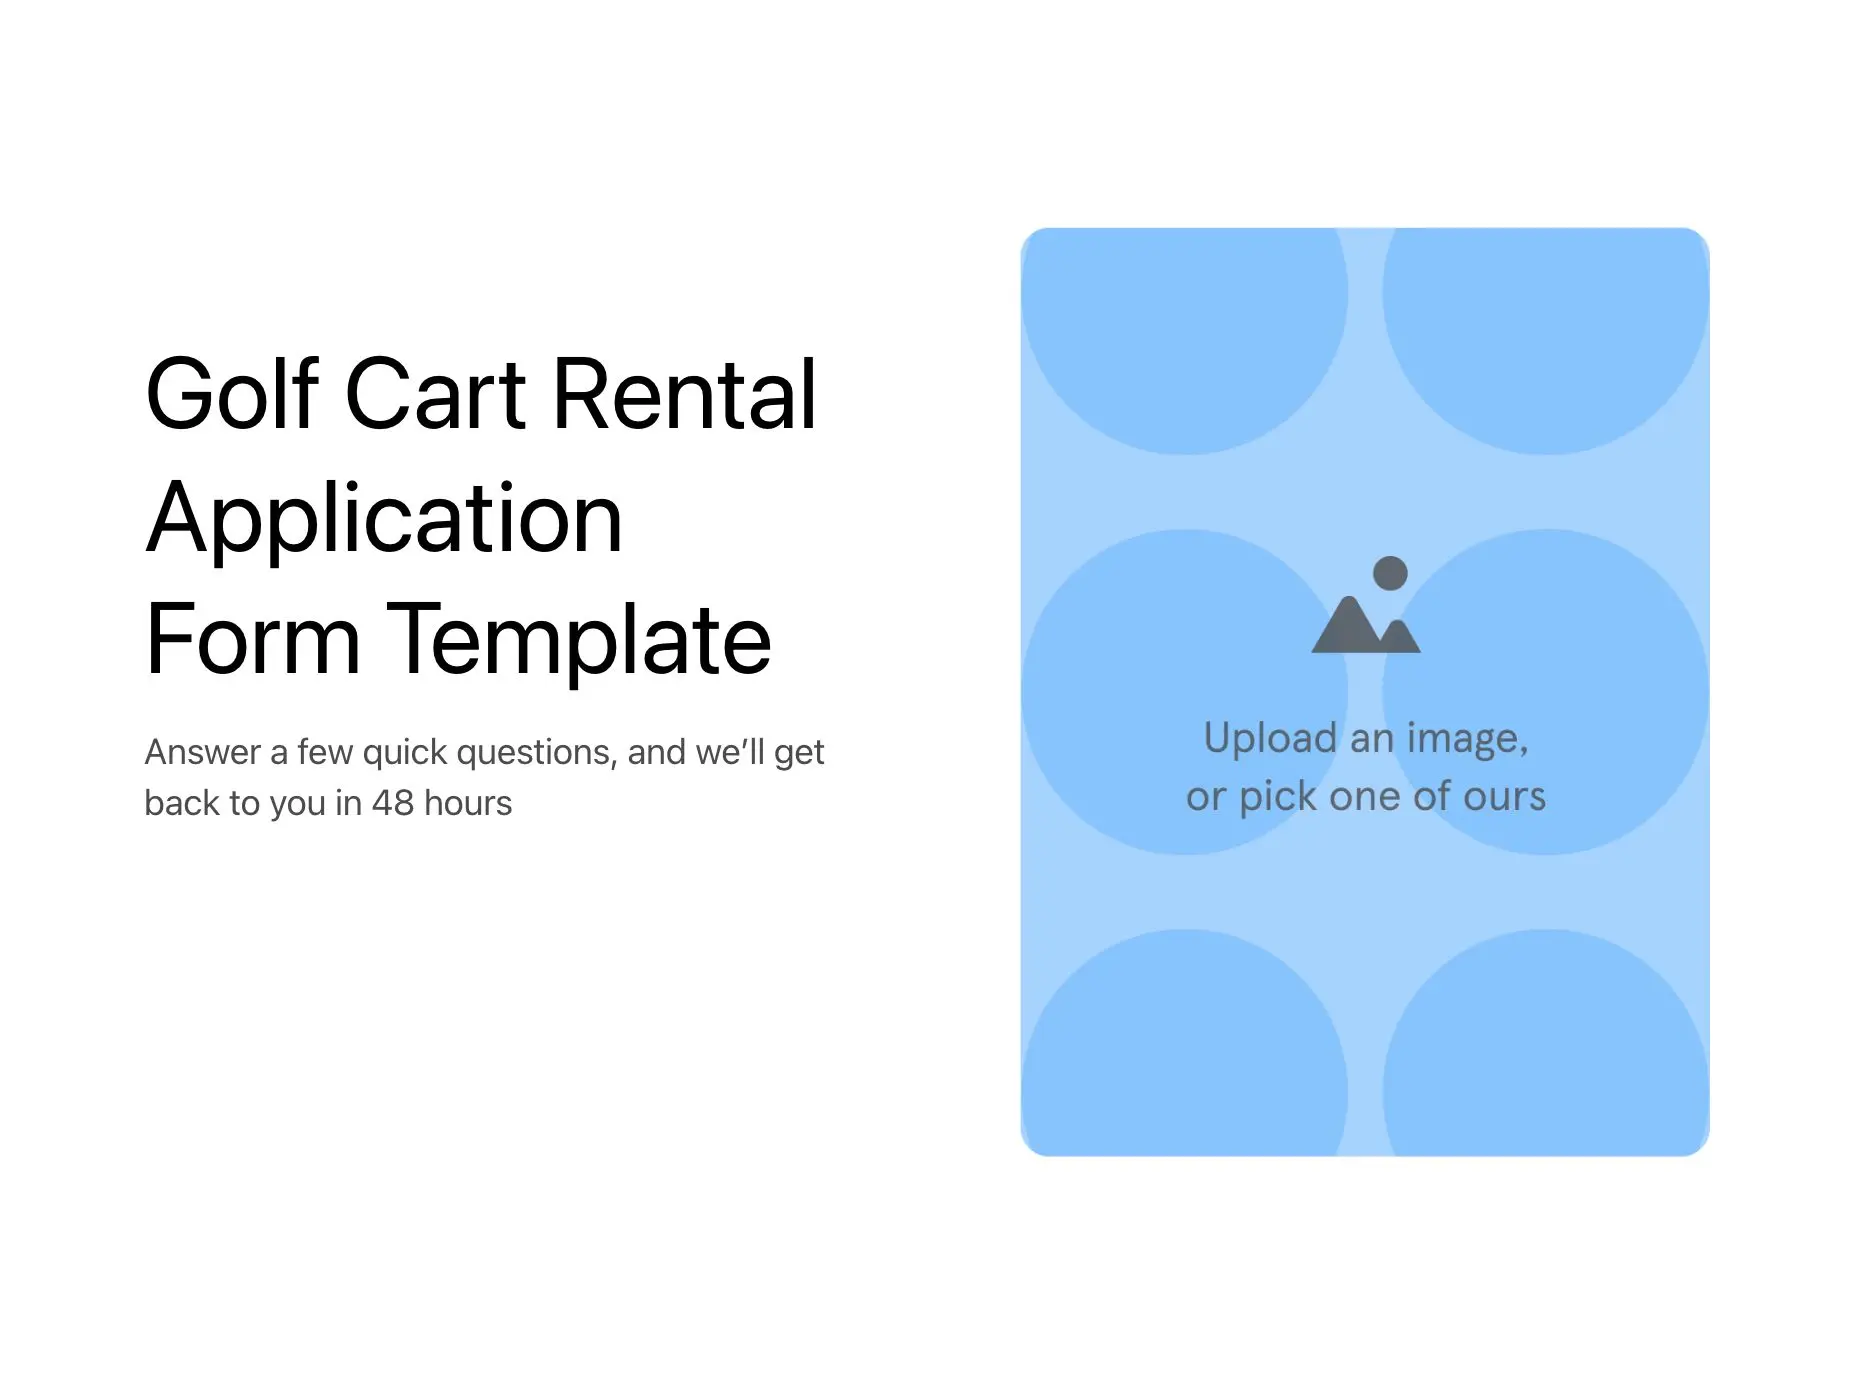 Golf Cart Rental Application Form Template Hero